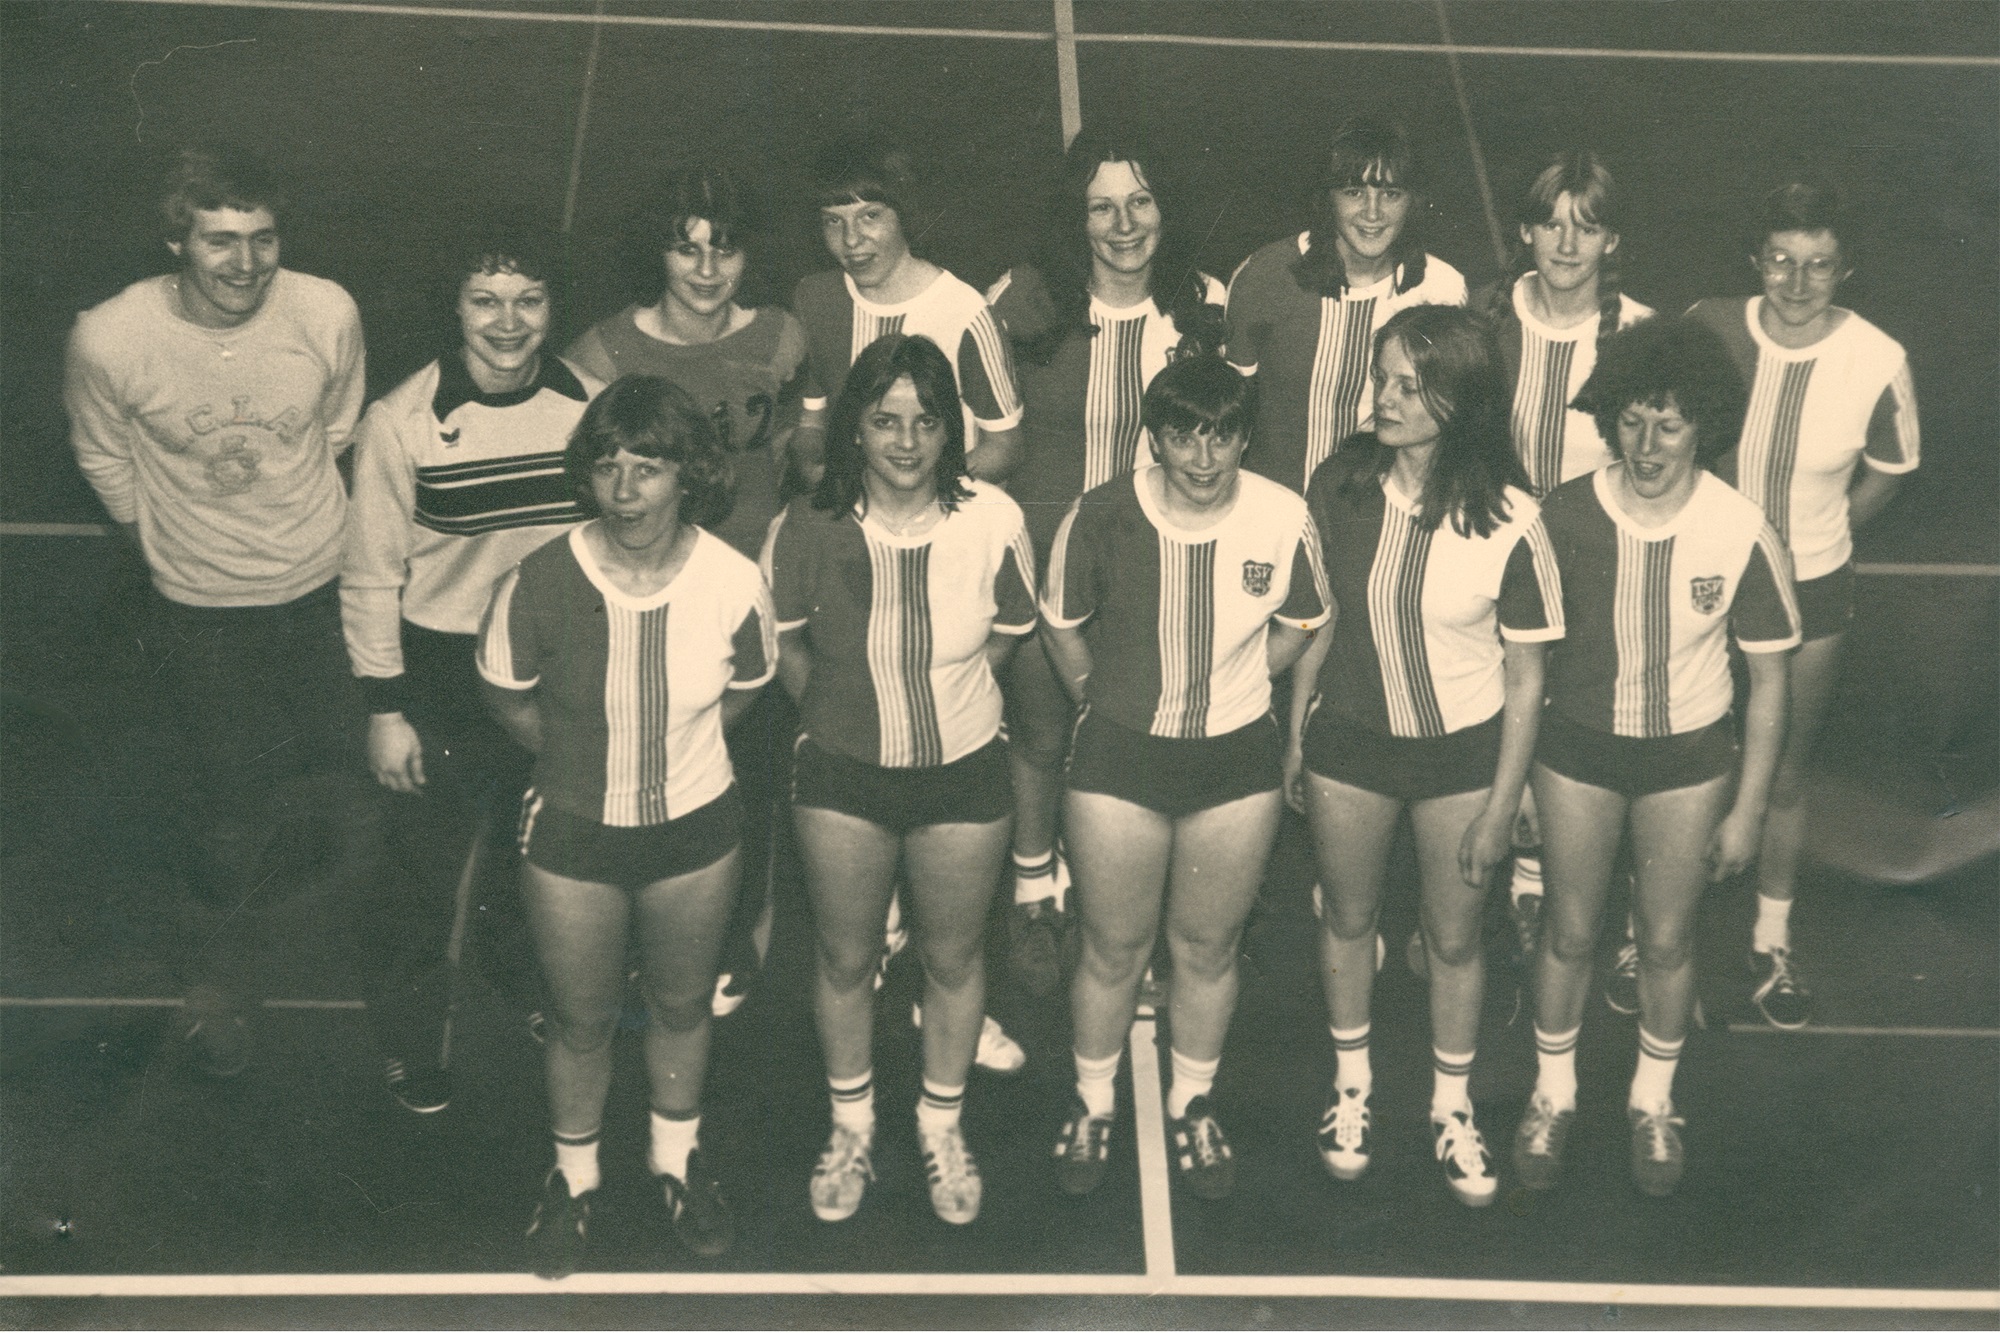 KTSV Damen 1978 (Bild: Privat)